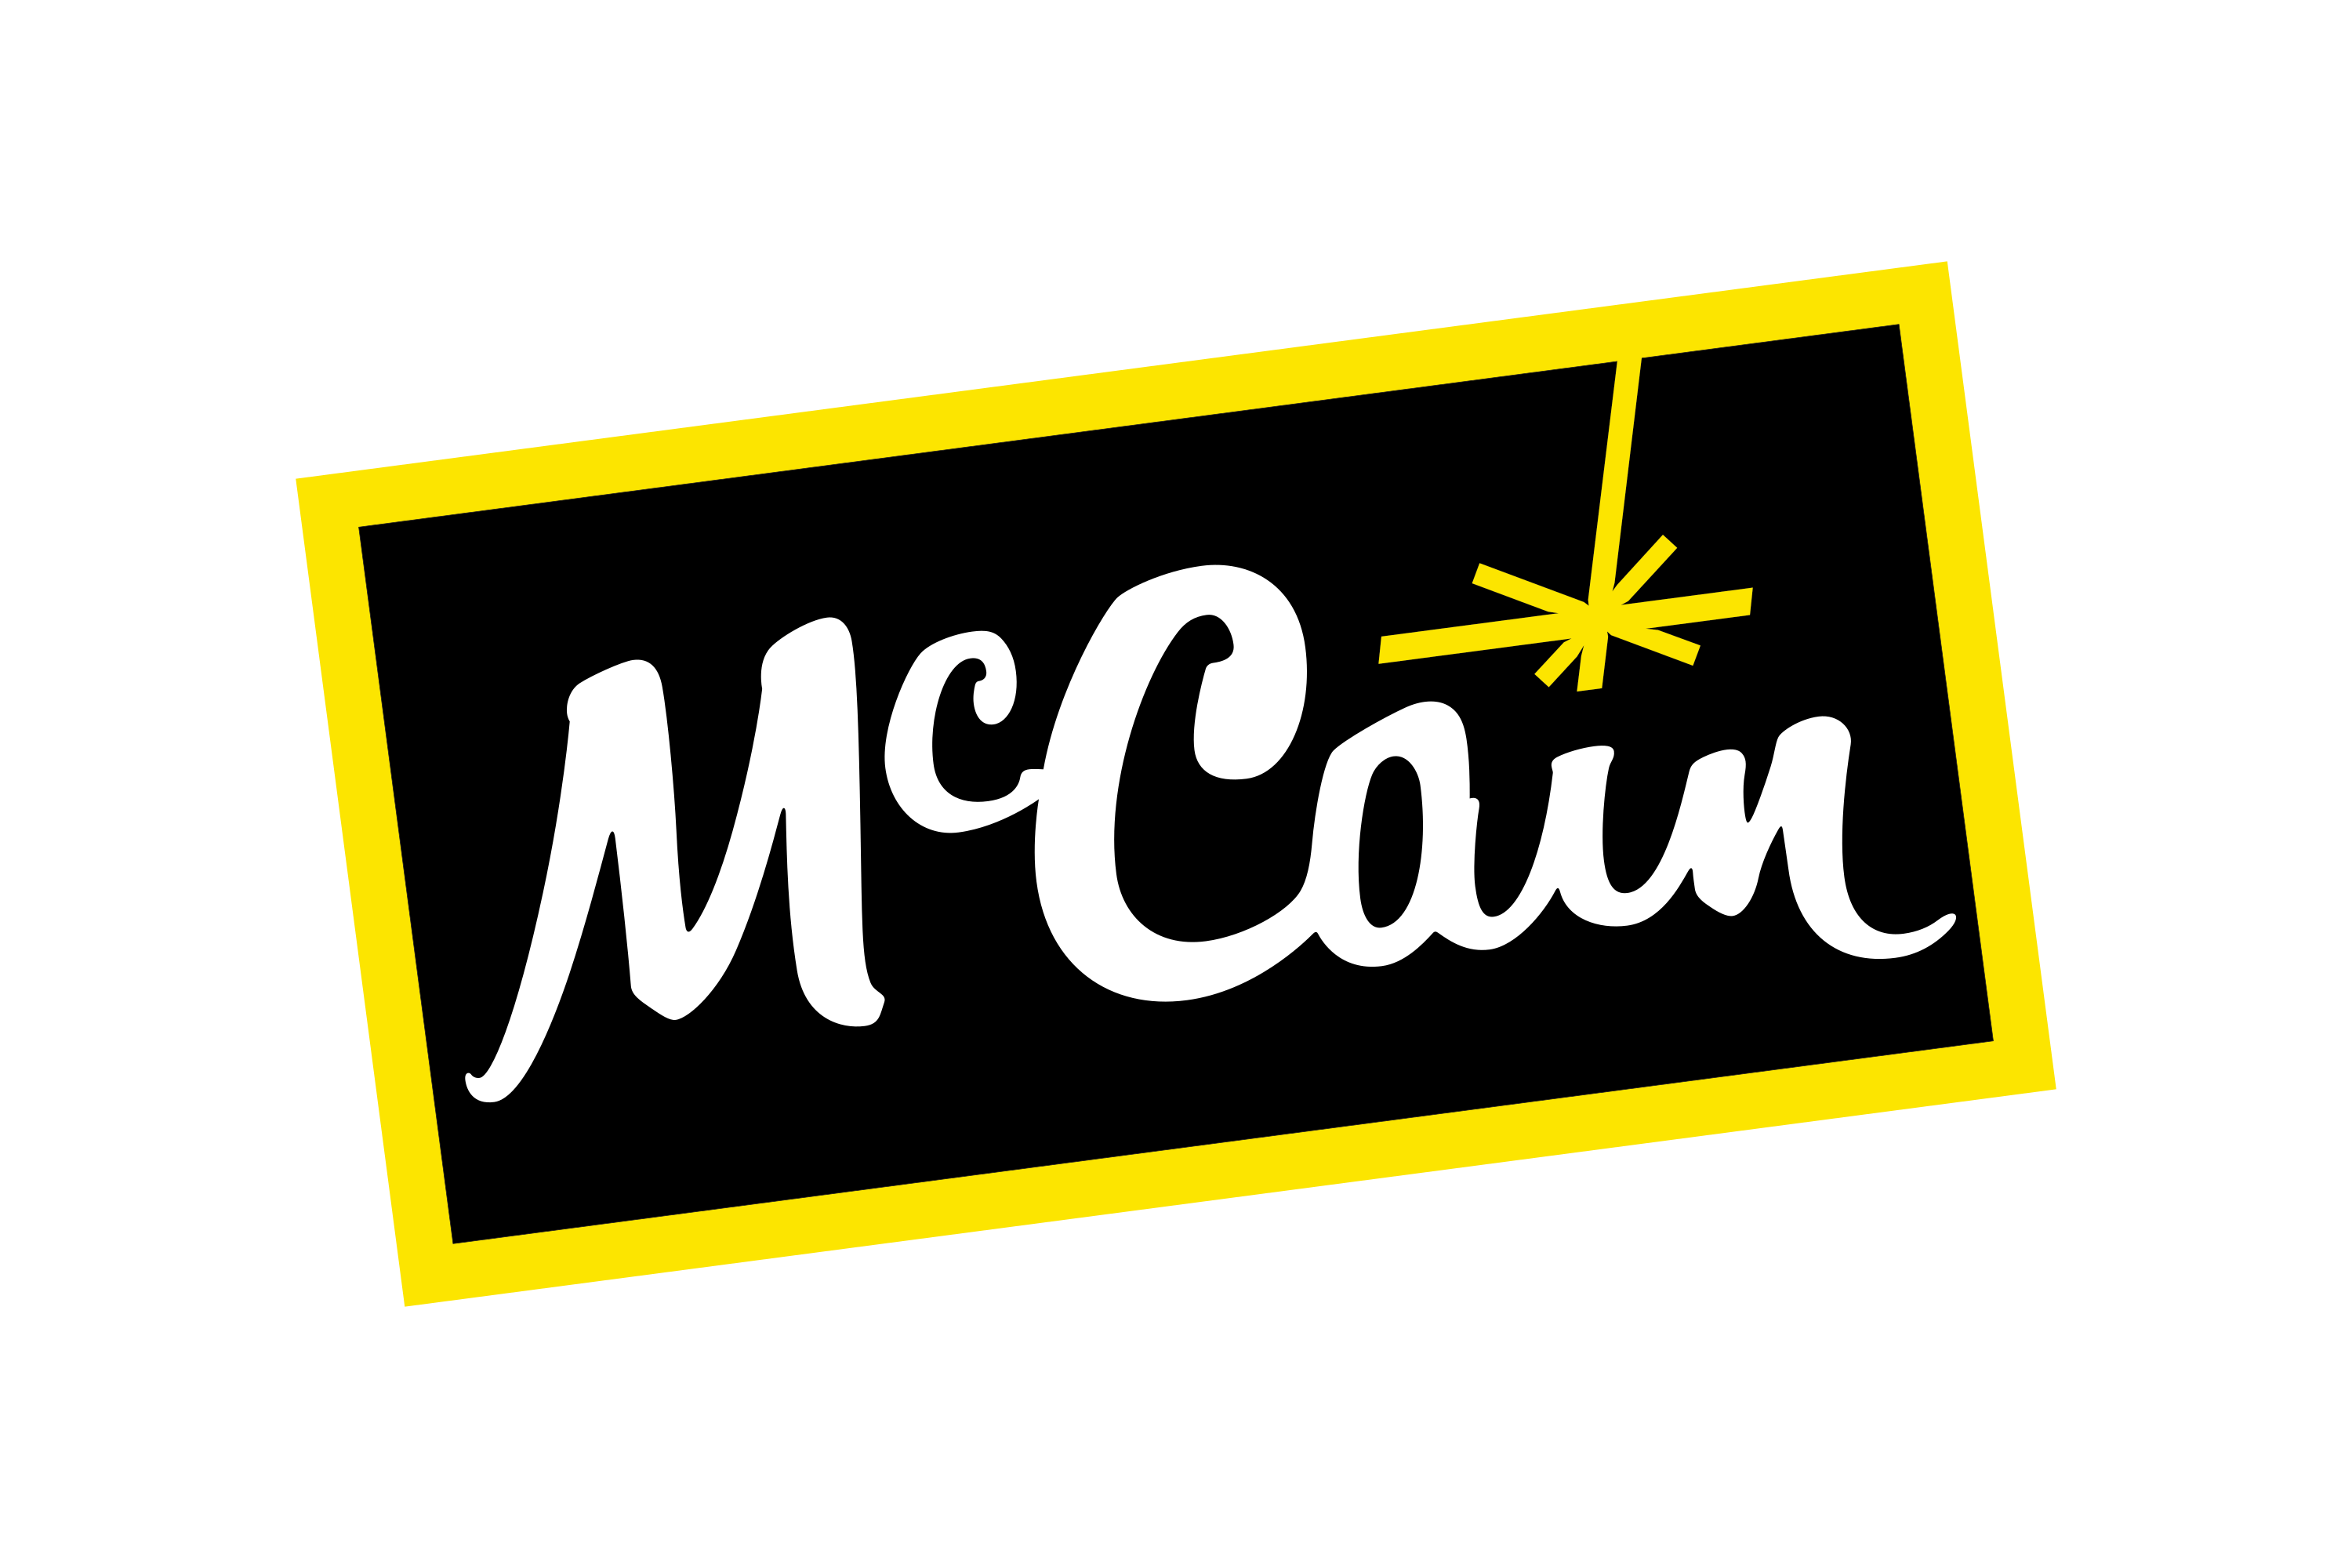 Download McCain Foods Logo in SVG Vector or PNG File Format - Logo.wine